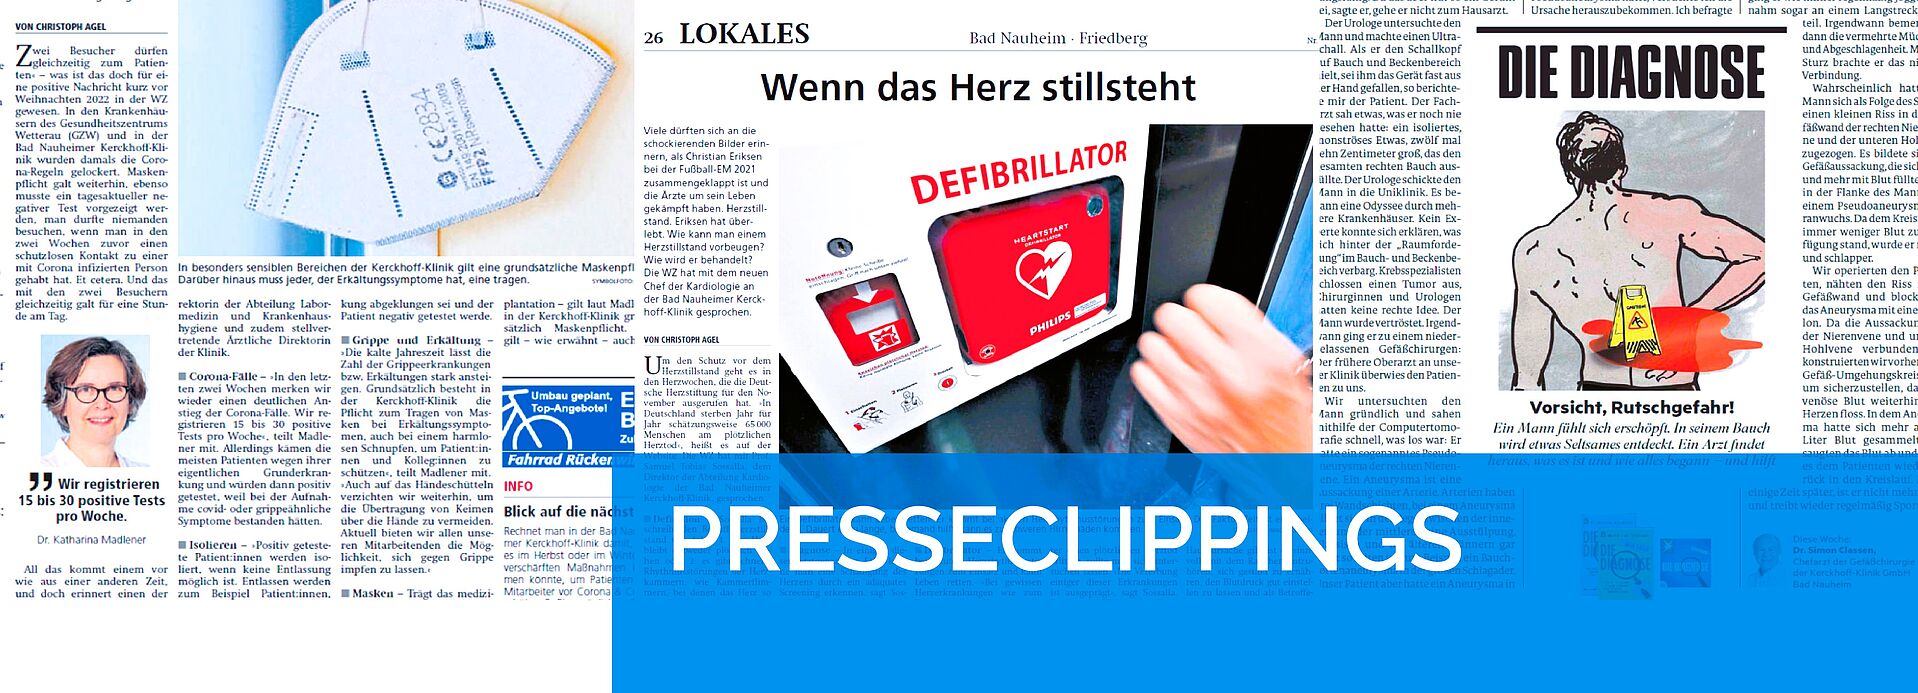 Presseclippings Kerckhoff-Klinik